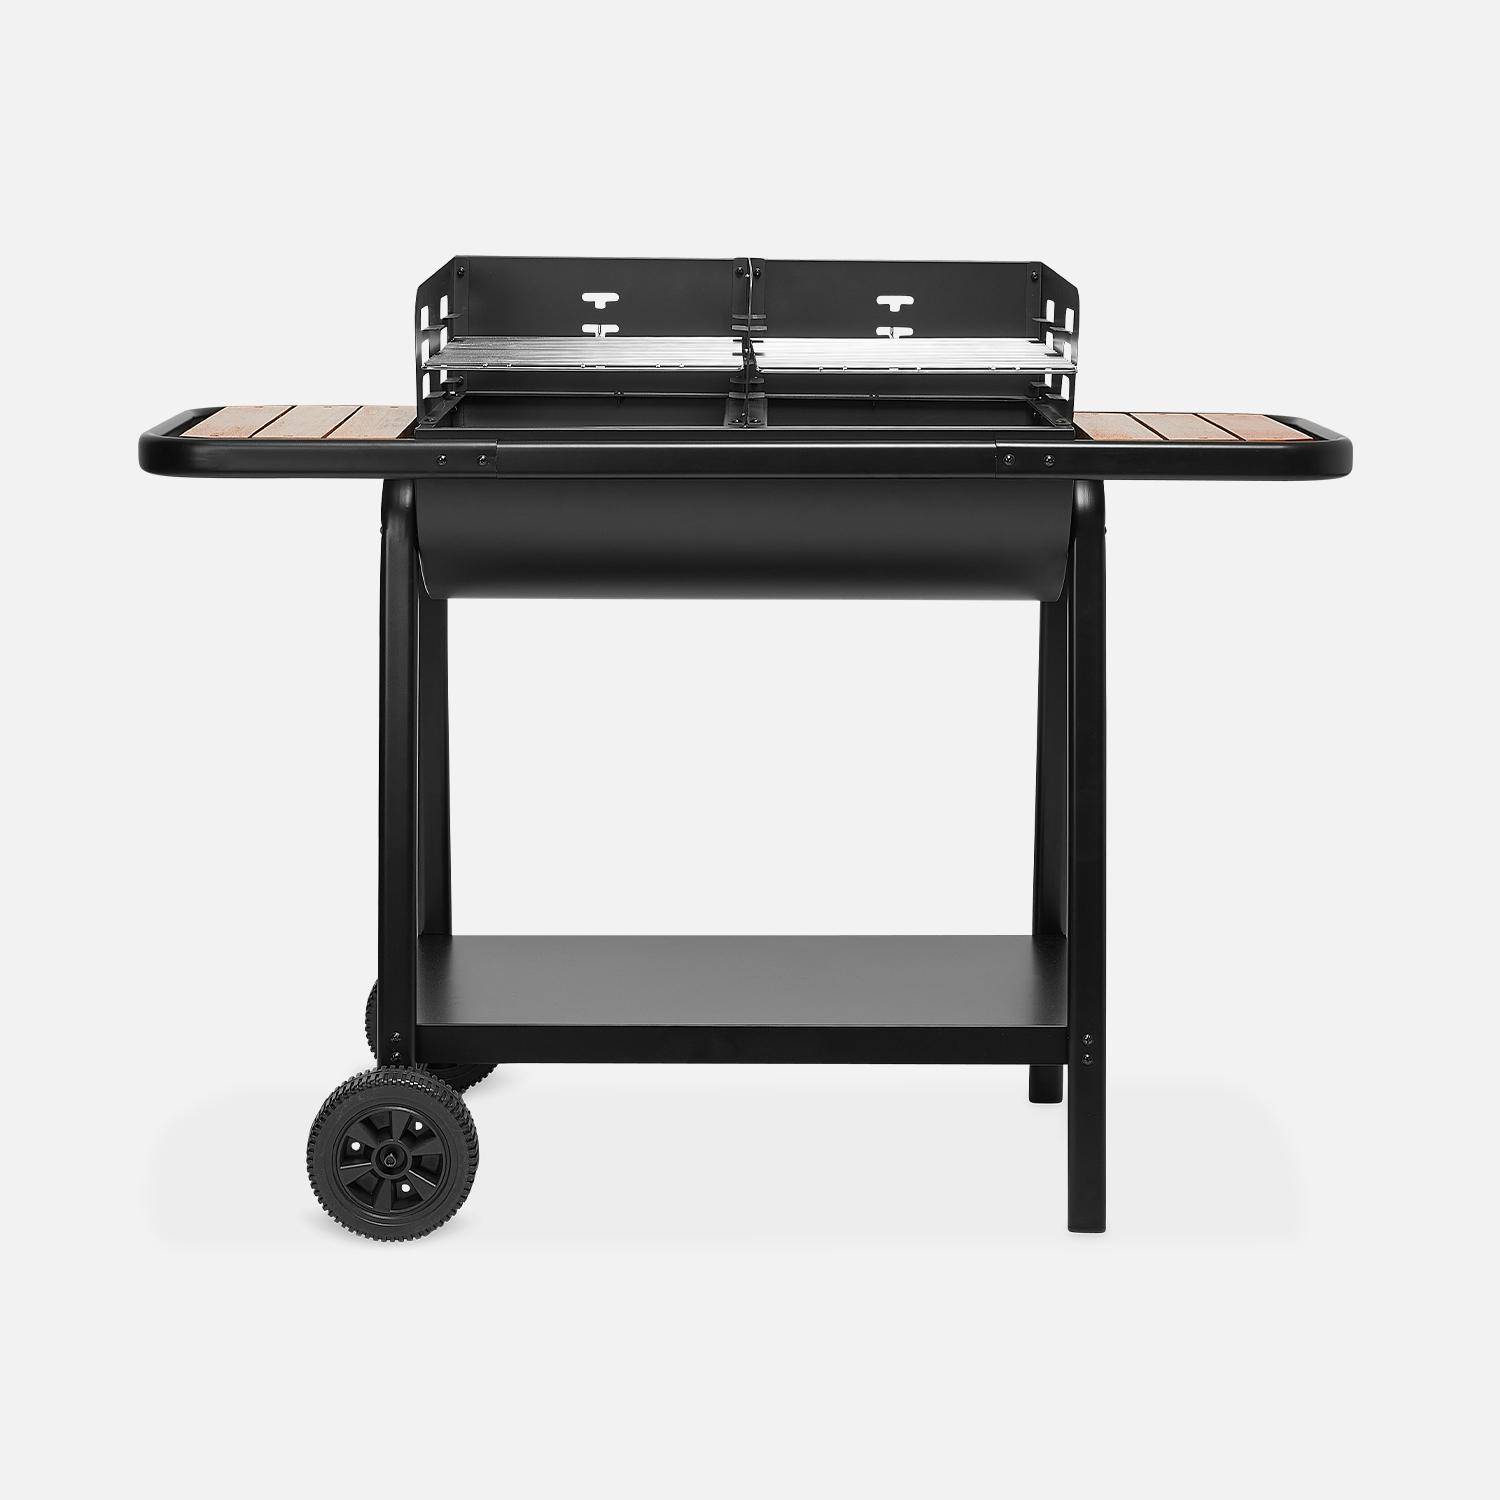 Lucien zwarte houtskoolbarbecue, asvanger, 2 planken, 2 grillroosters, B 123 x D 56 x H 97cm,sweeek,Photo5